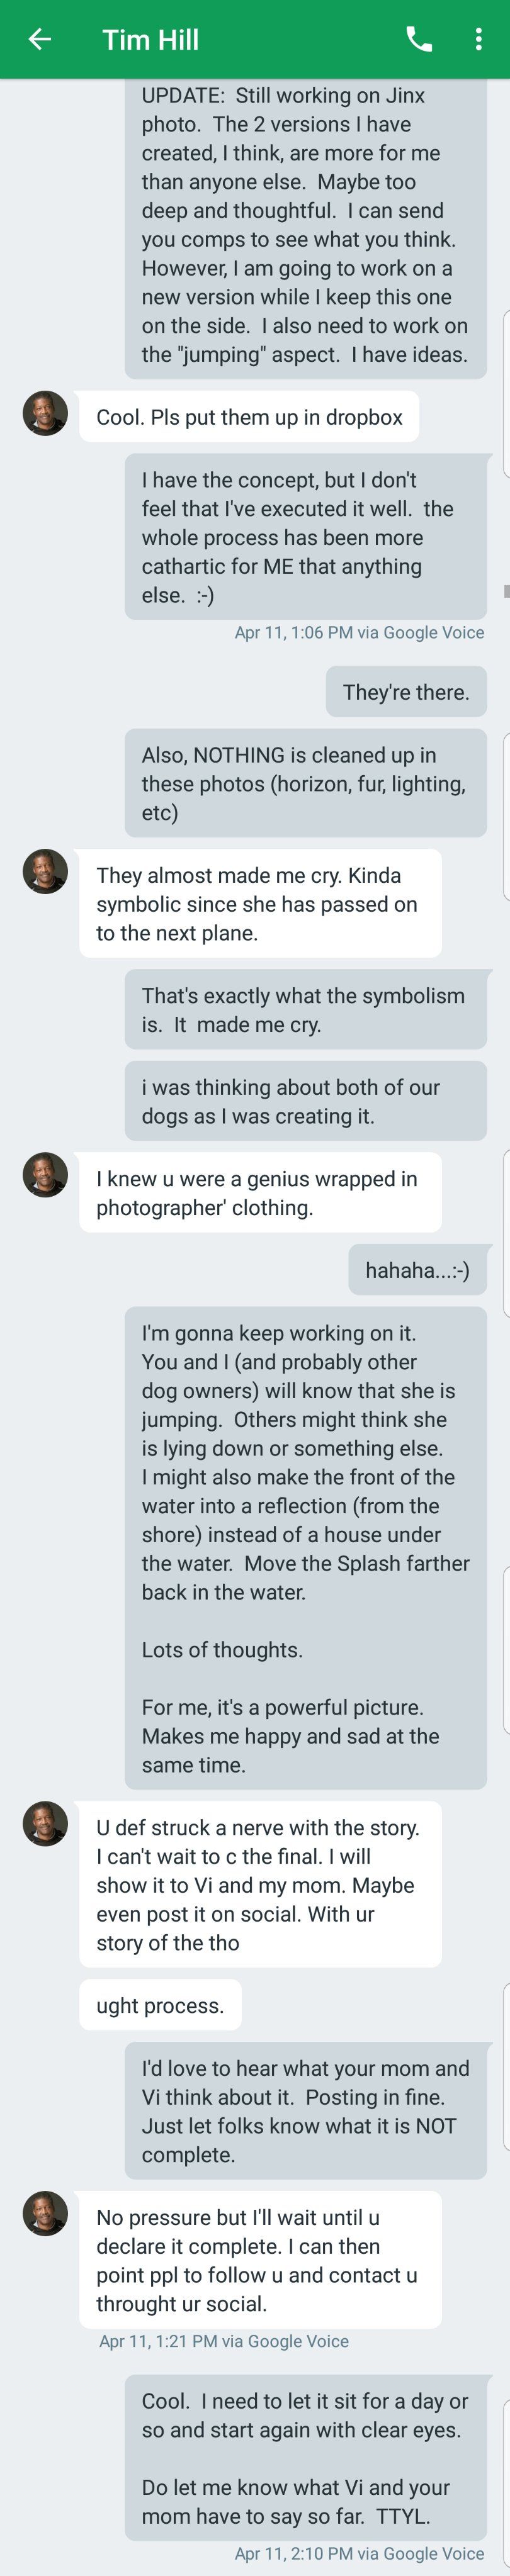 Conversation about Jinx's Dog Portrait between Michael Jackson and Tim Hill